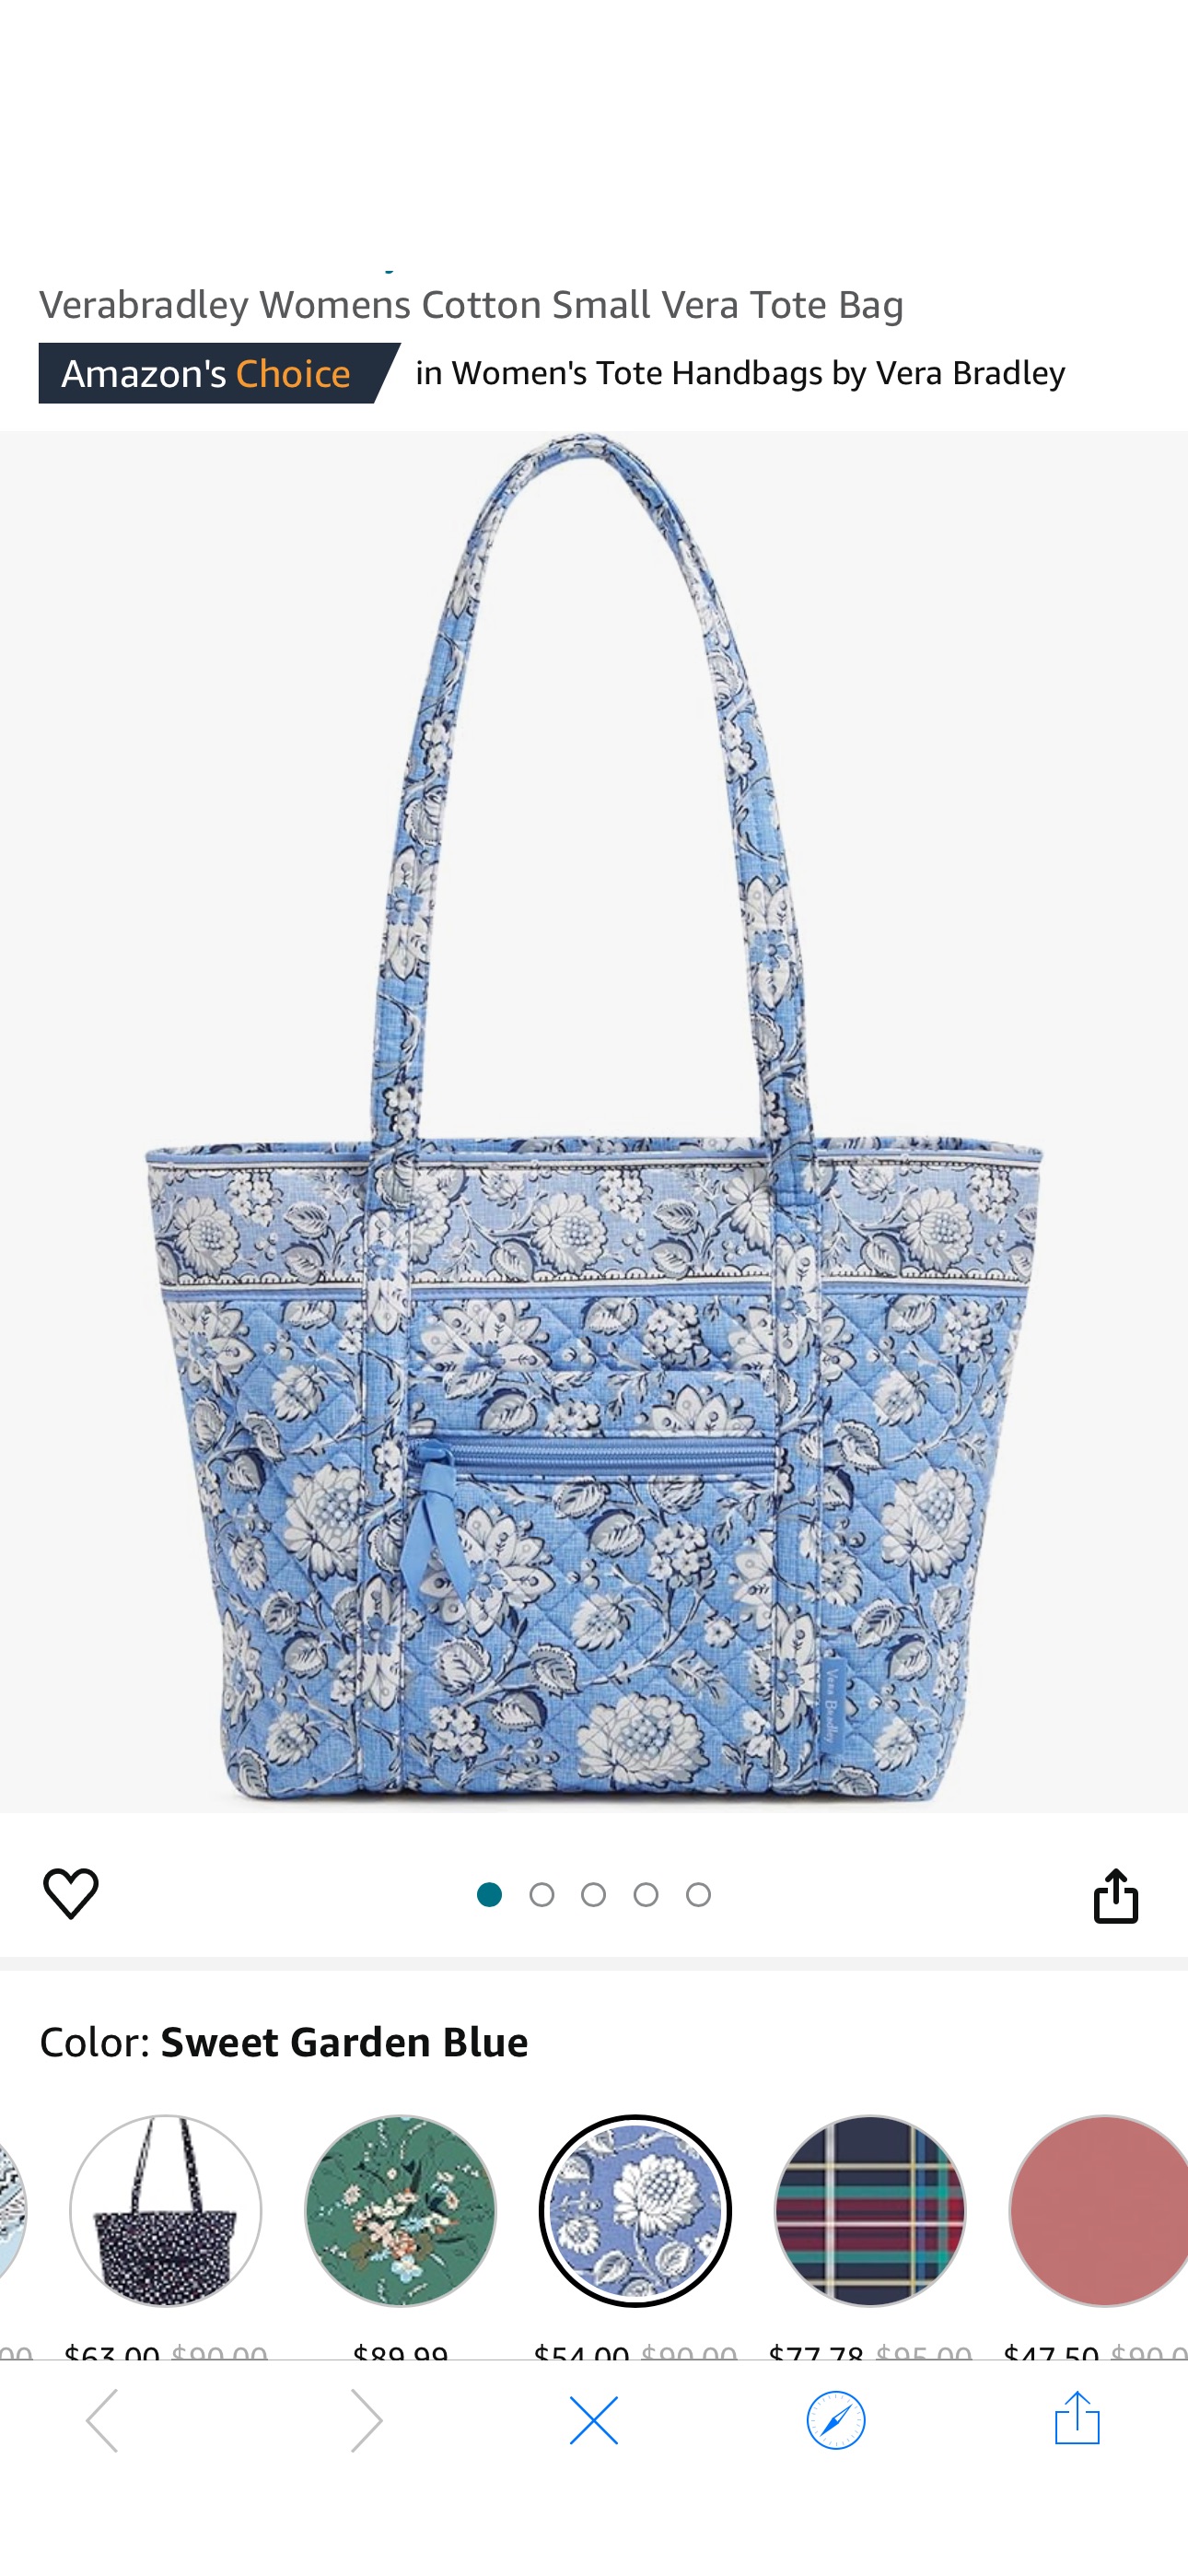 Amazon.com: Vera Bradley Cotton Small Vera Tote Bag, Sweet Garden Blue : Clothing, Shoes & Jewelry